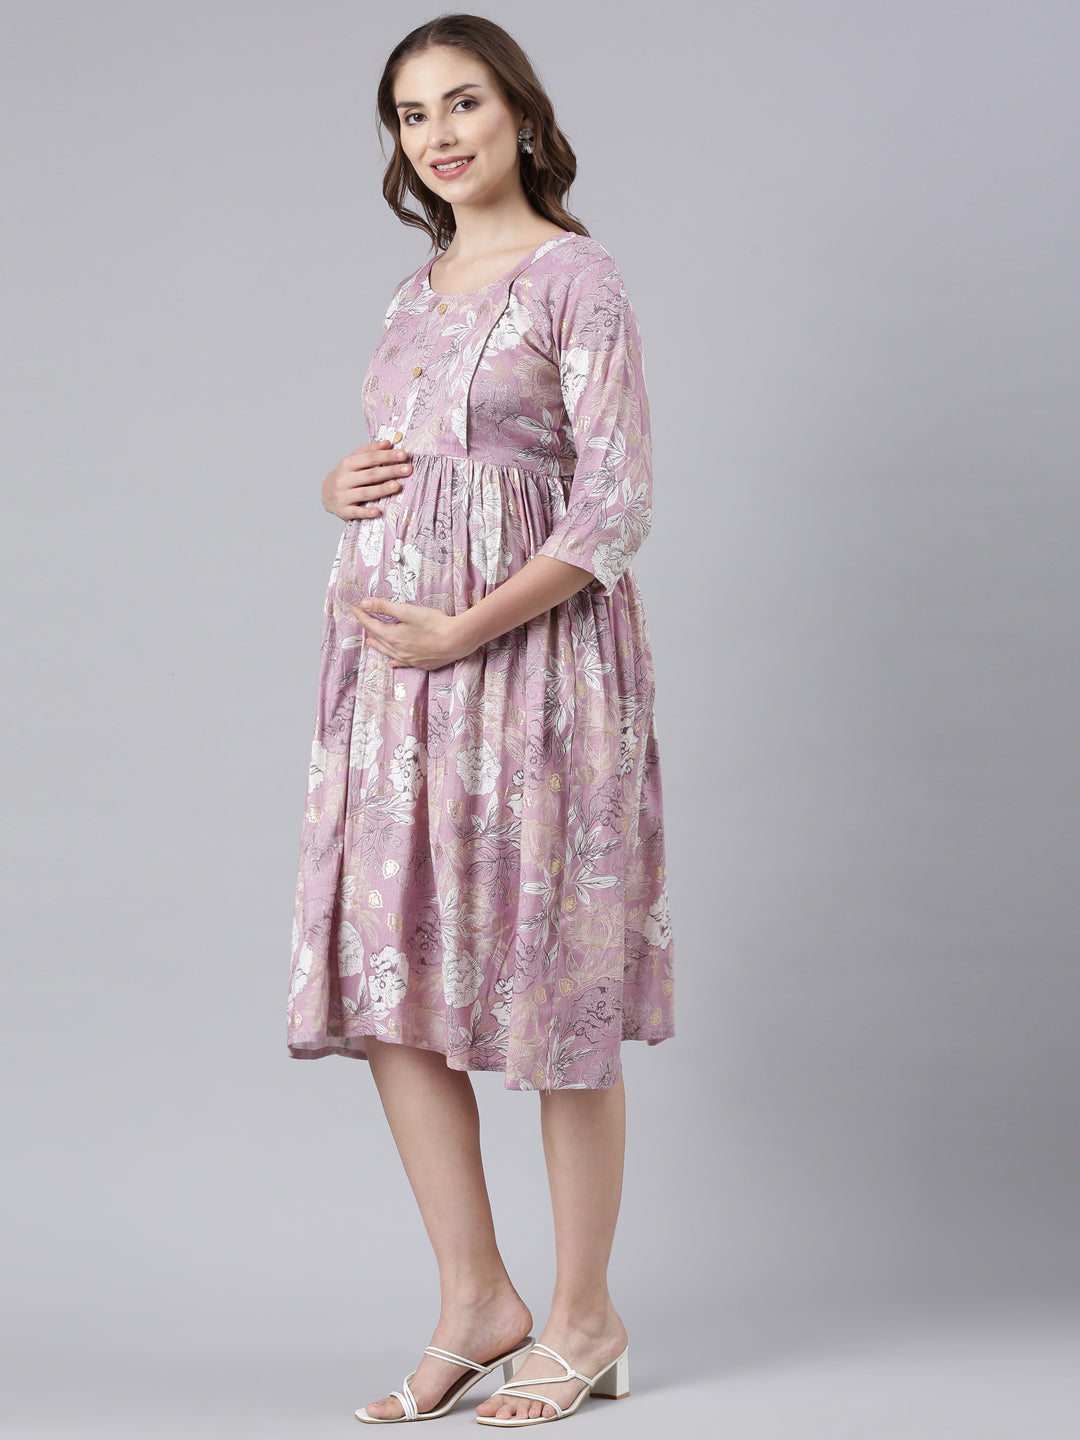 Lilac Plum maternity and feeding dress